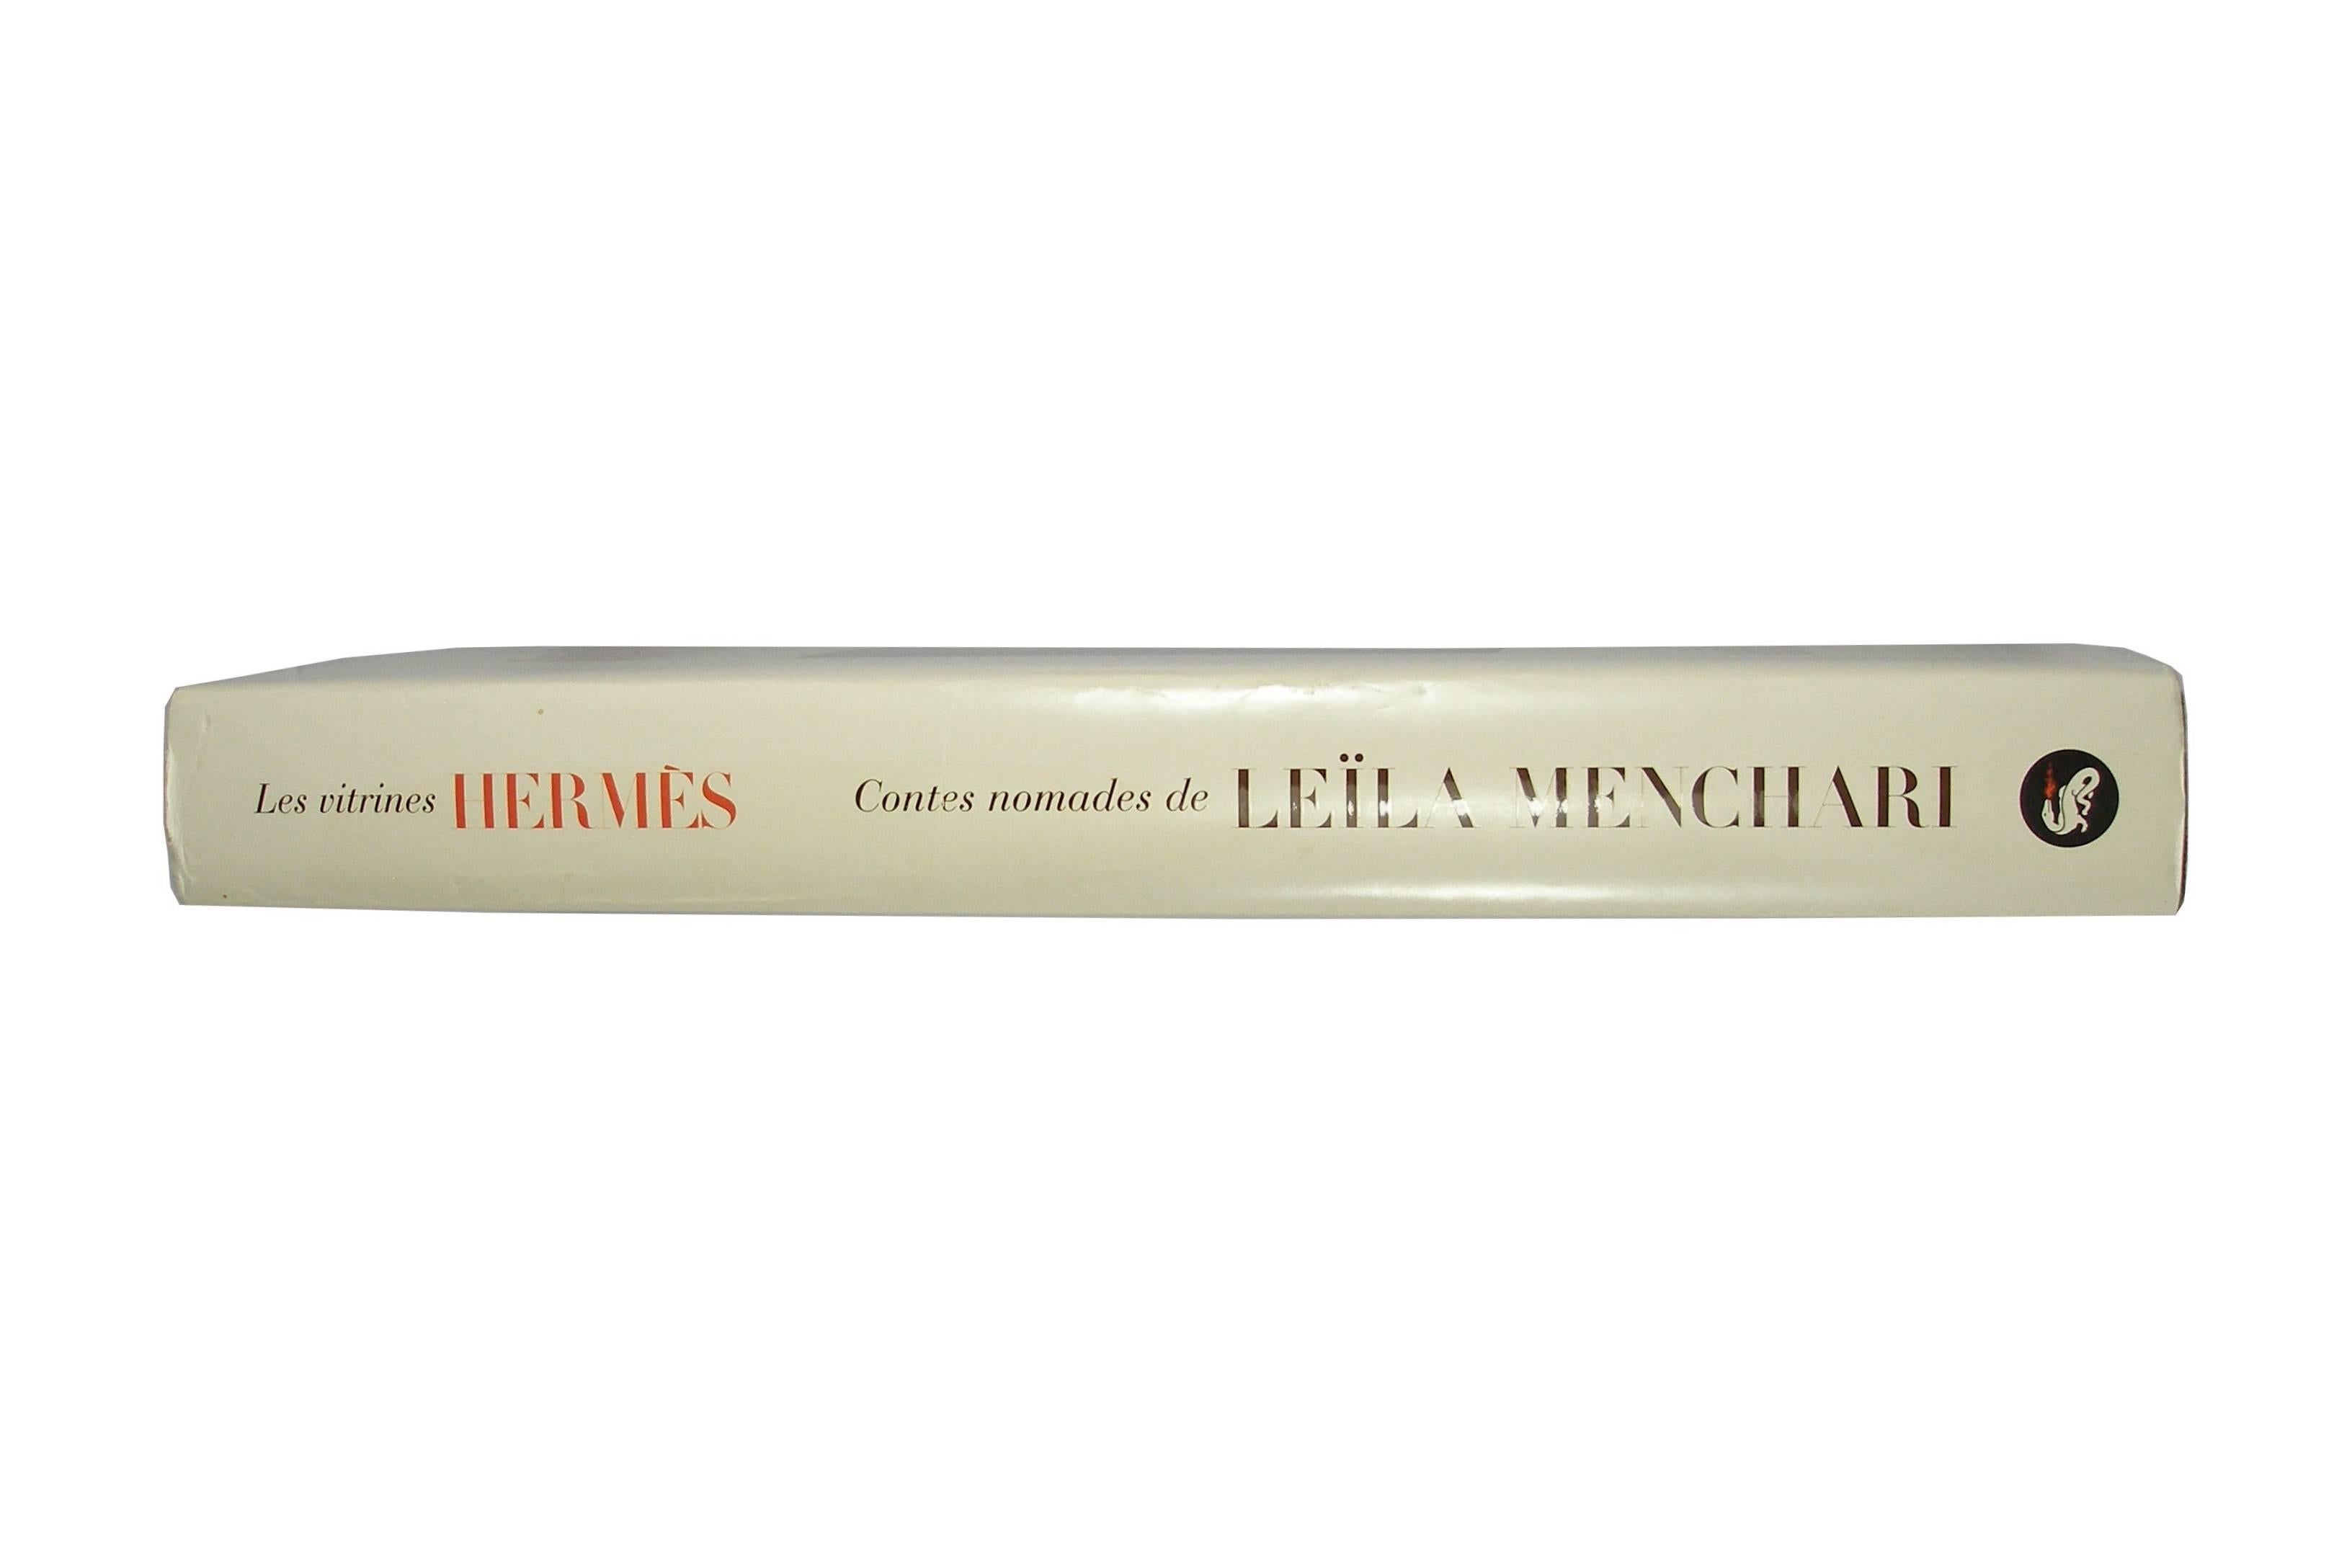 Yellow RARE HERMES Les Vitrines Hermes Contes Nomades Leila Menchari Book For Sale